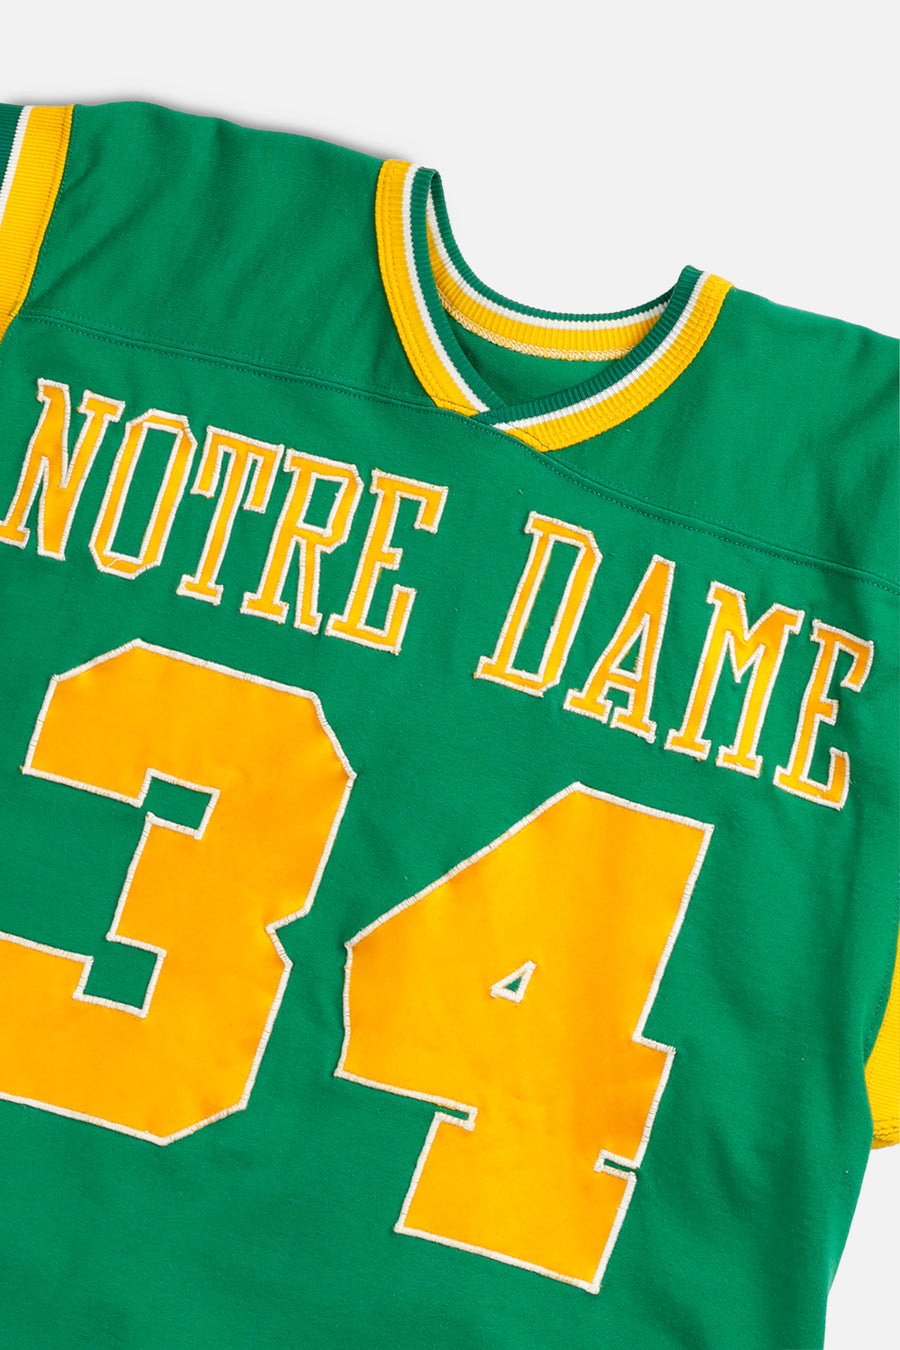 Vintage Notre Dame Football Jersey - M